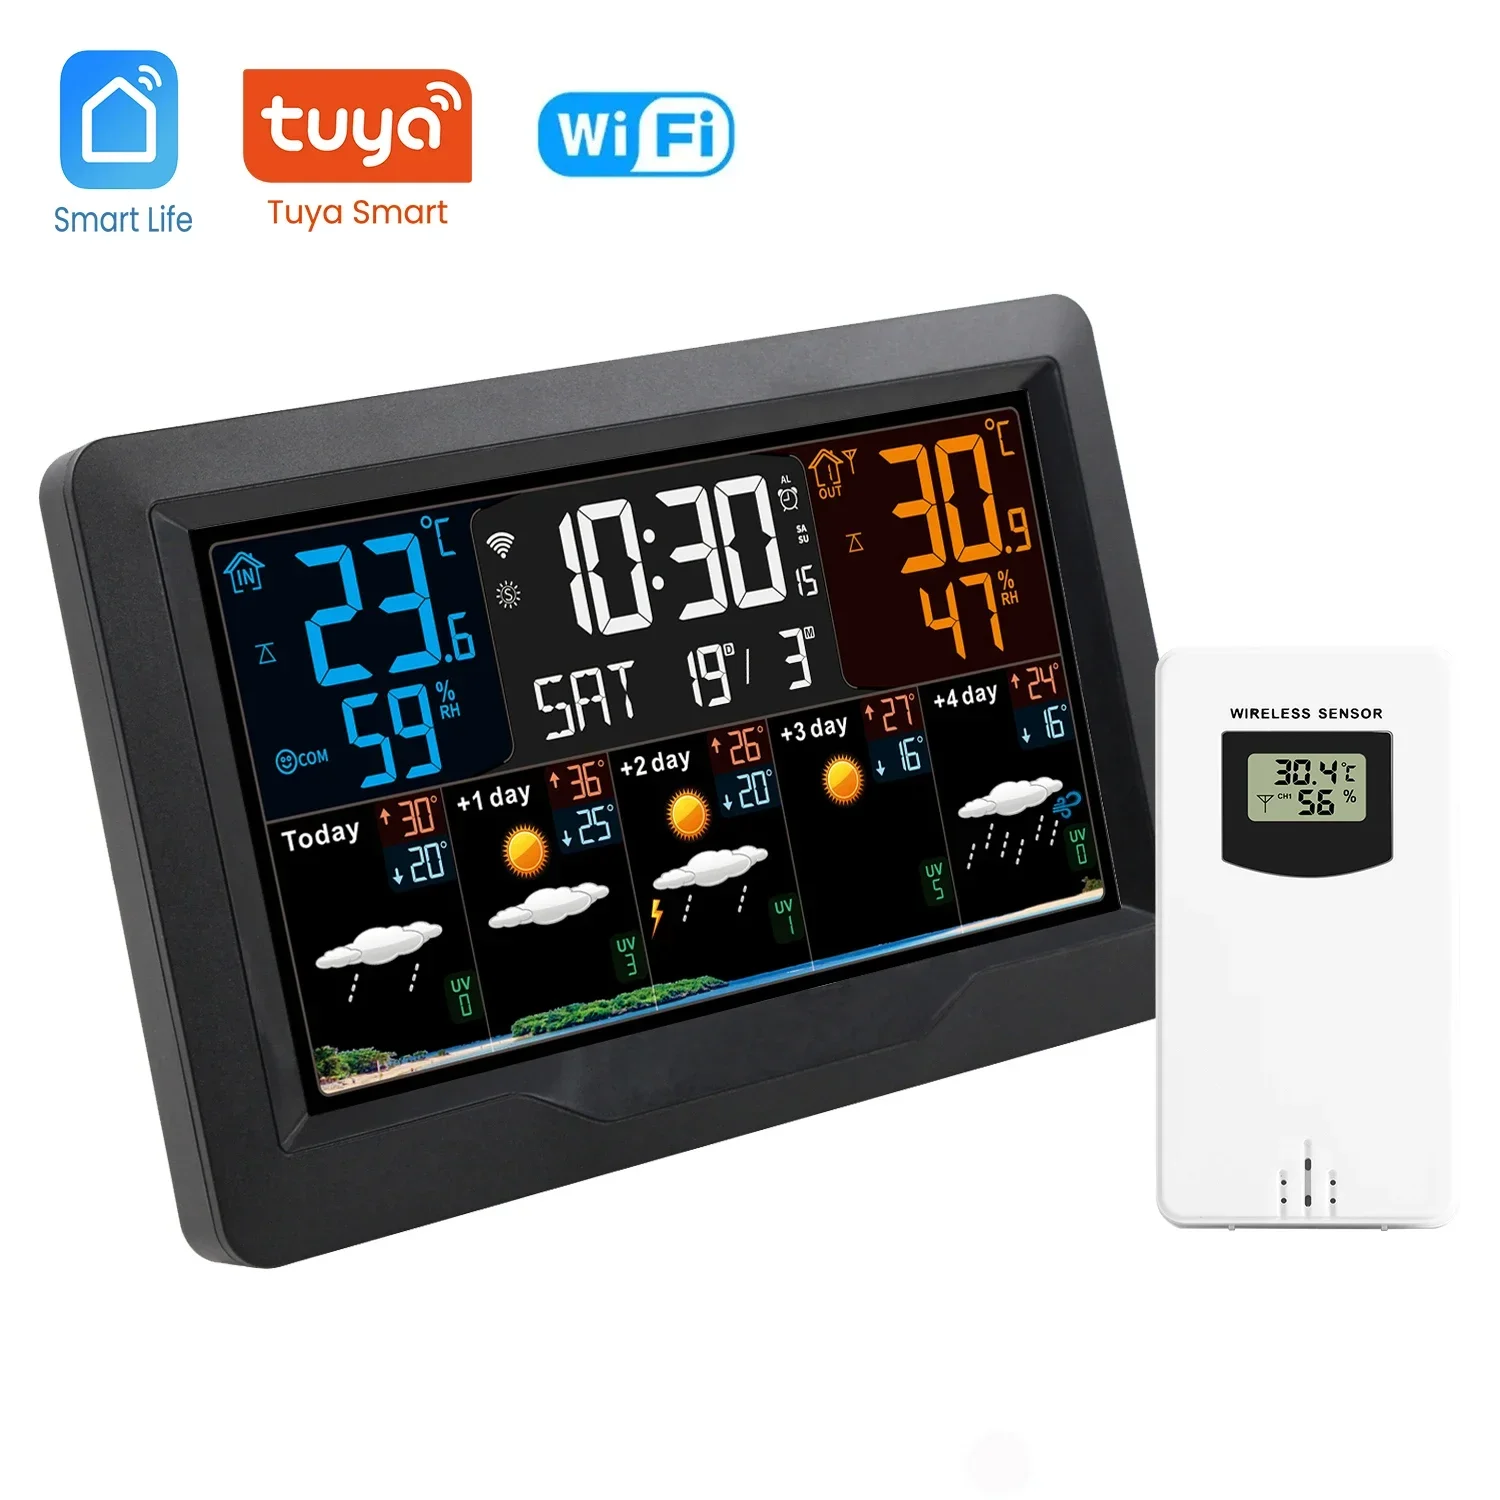 Tuya WiFi Thermometer Hygrometer Digital Wireless Weather Station